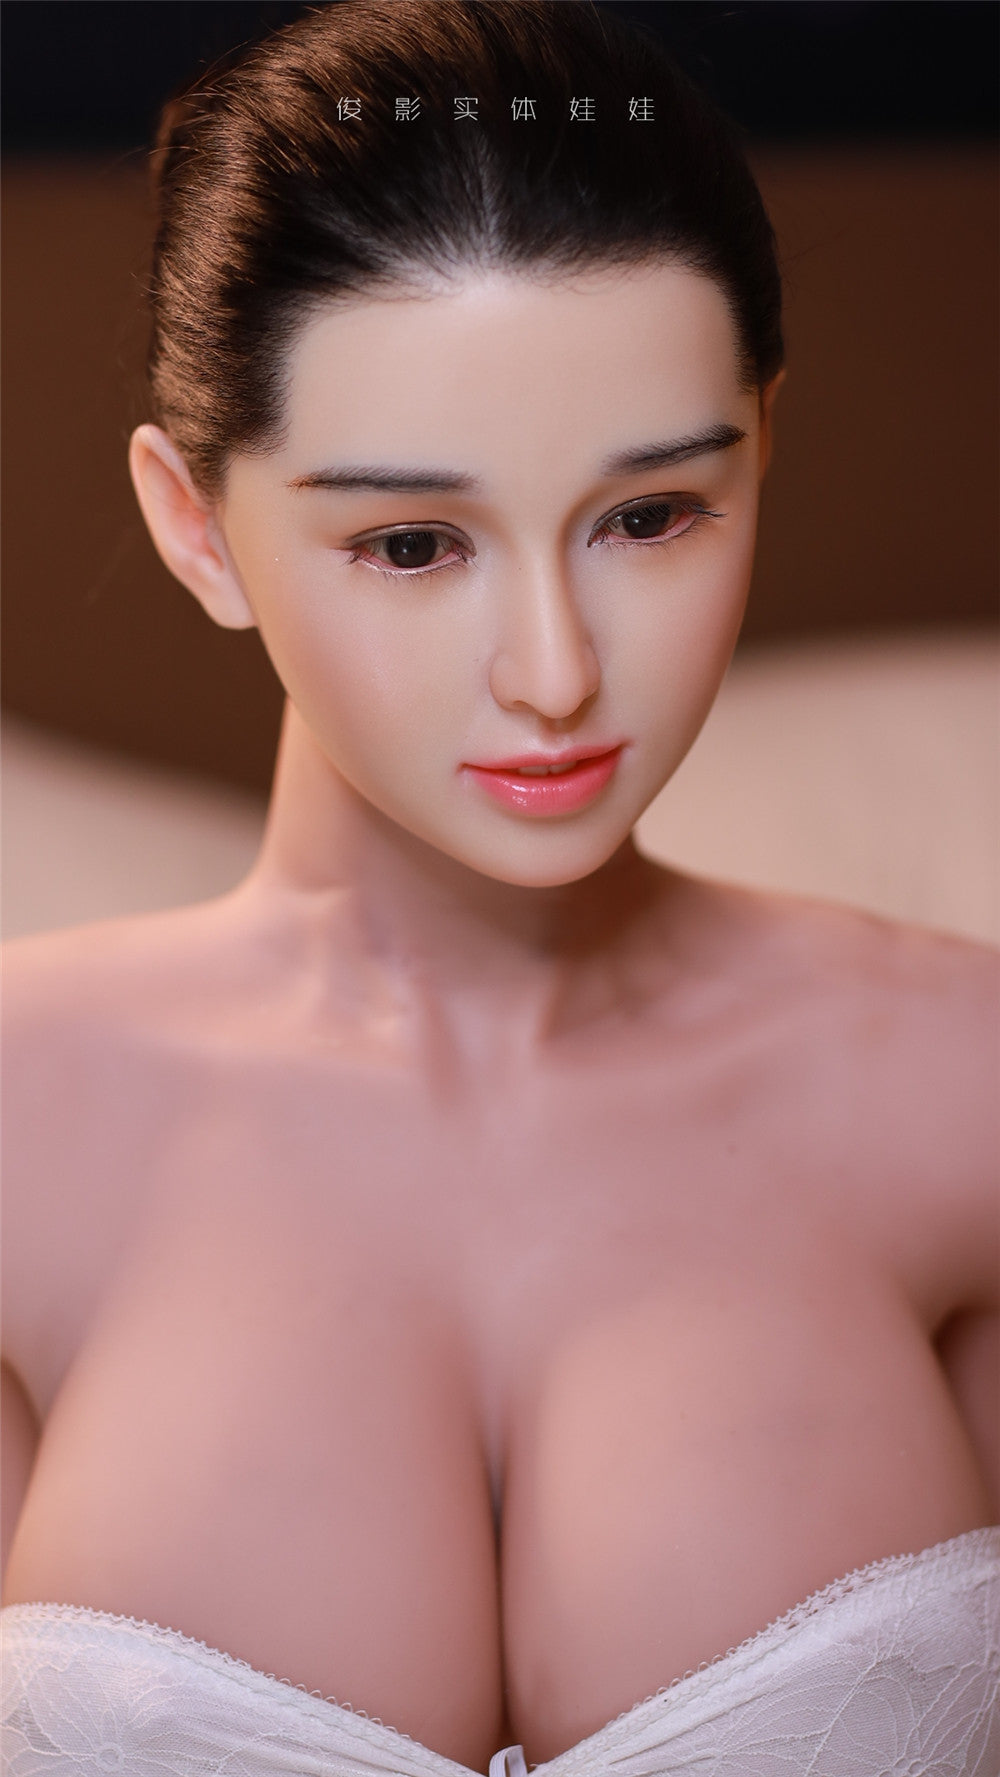 JY Doll - Realistic Sex Doll - 5ft 5in (164cm) - Scarlett - Love Dolls 4U